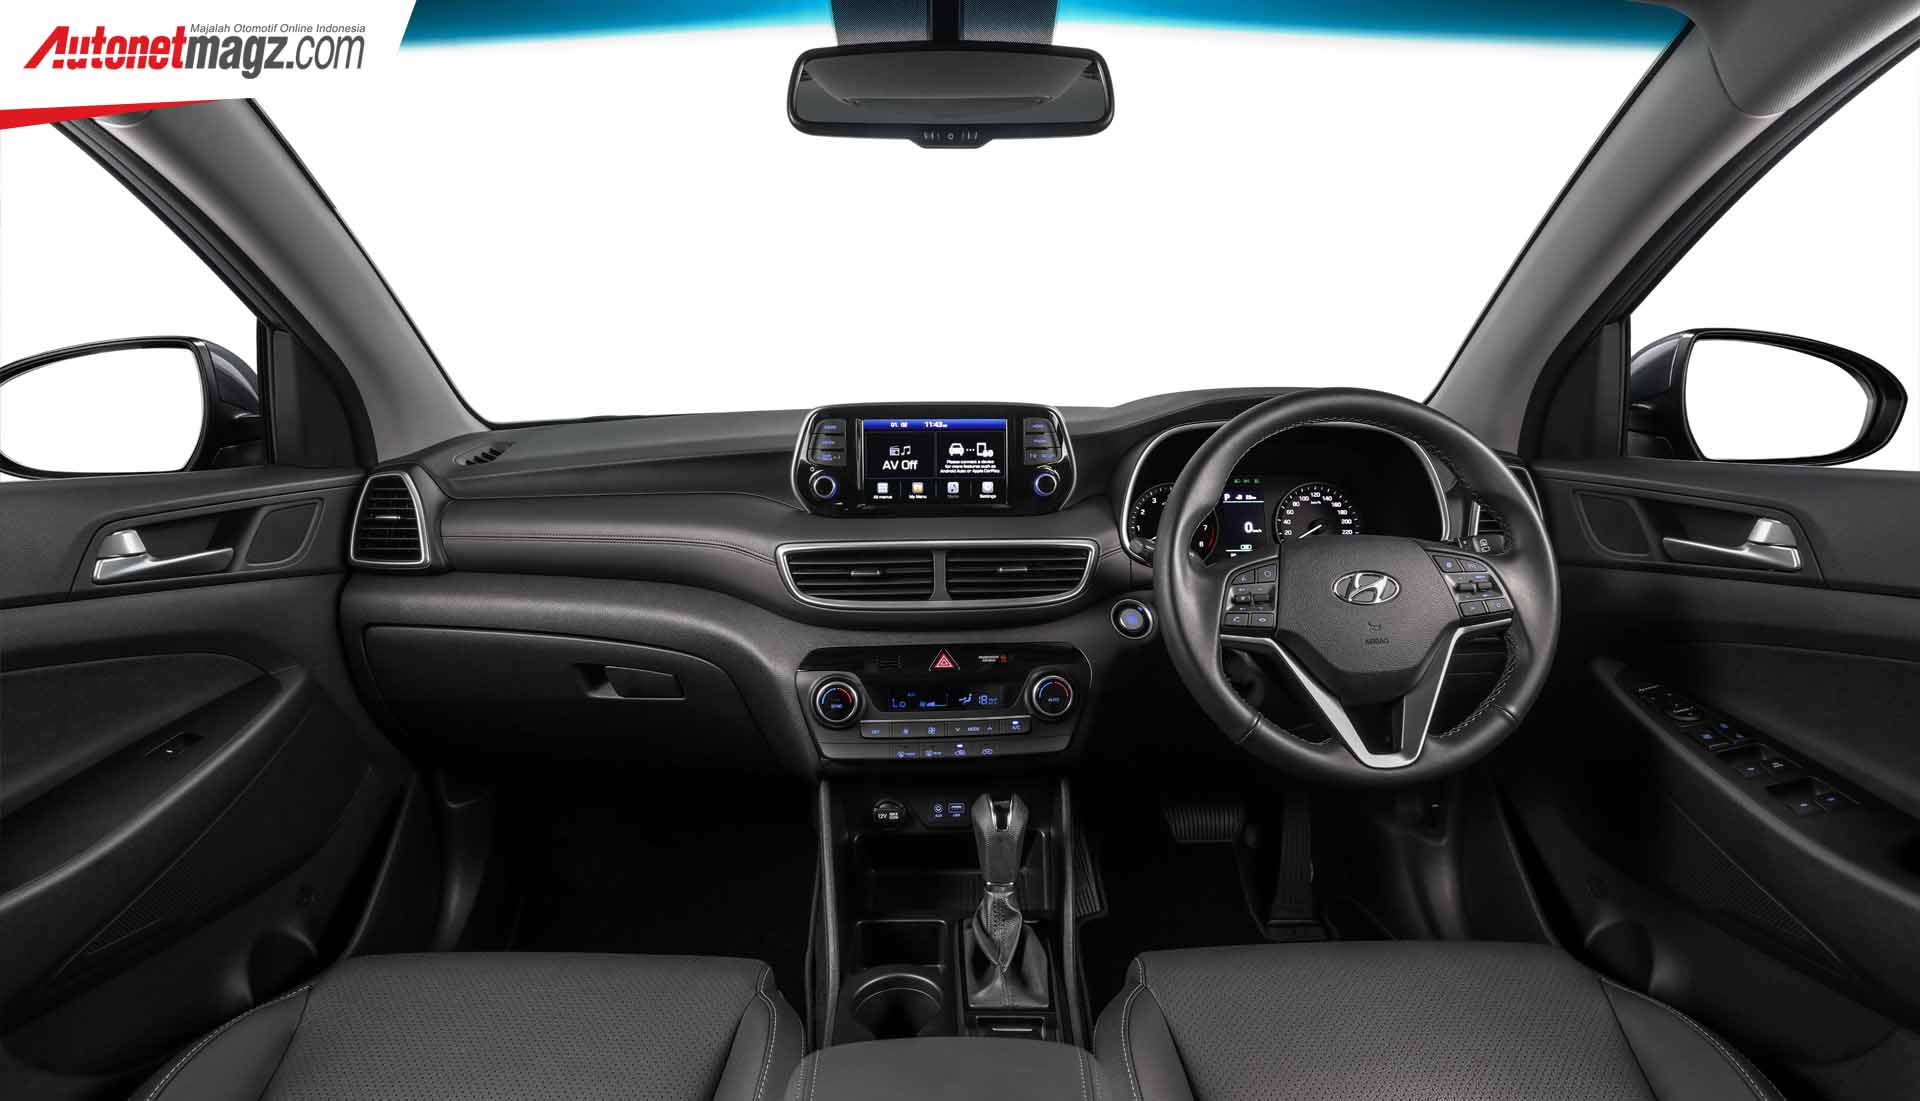 Berita, Interior Hyundai Tucson Facelift: Hyundai Tucson Facelift Malaysia, Wajah Baru, Tambah Airbags & Sensor